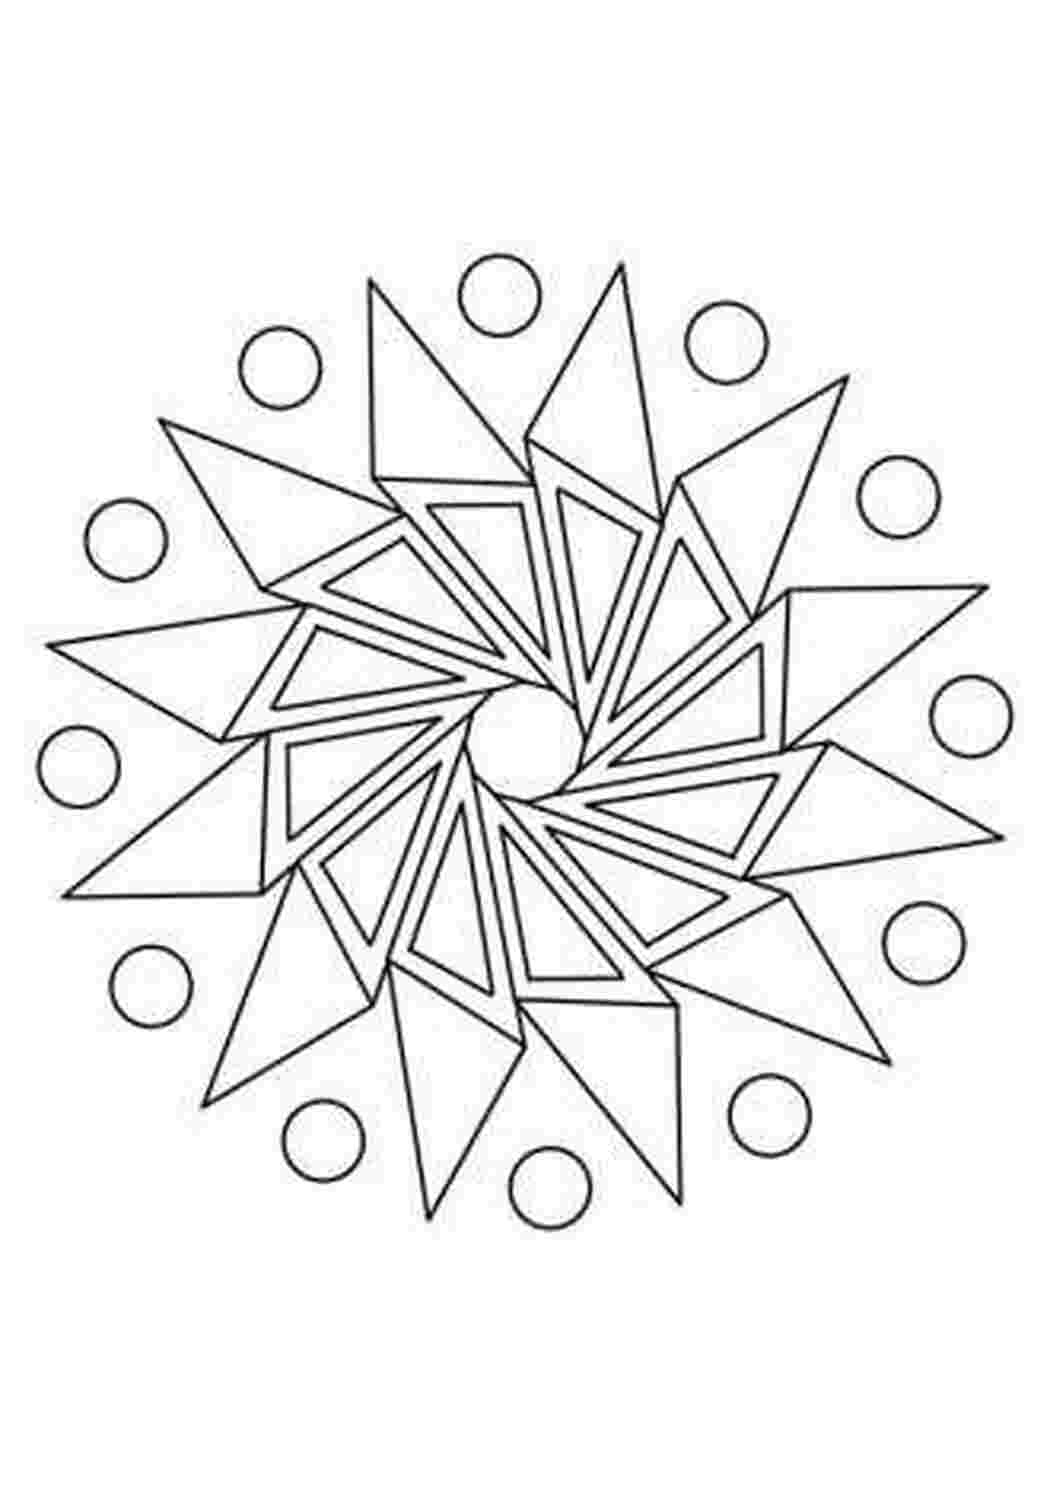 Орнамент из геометрических фигур раскраска